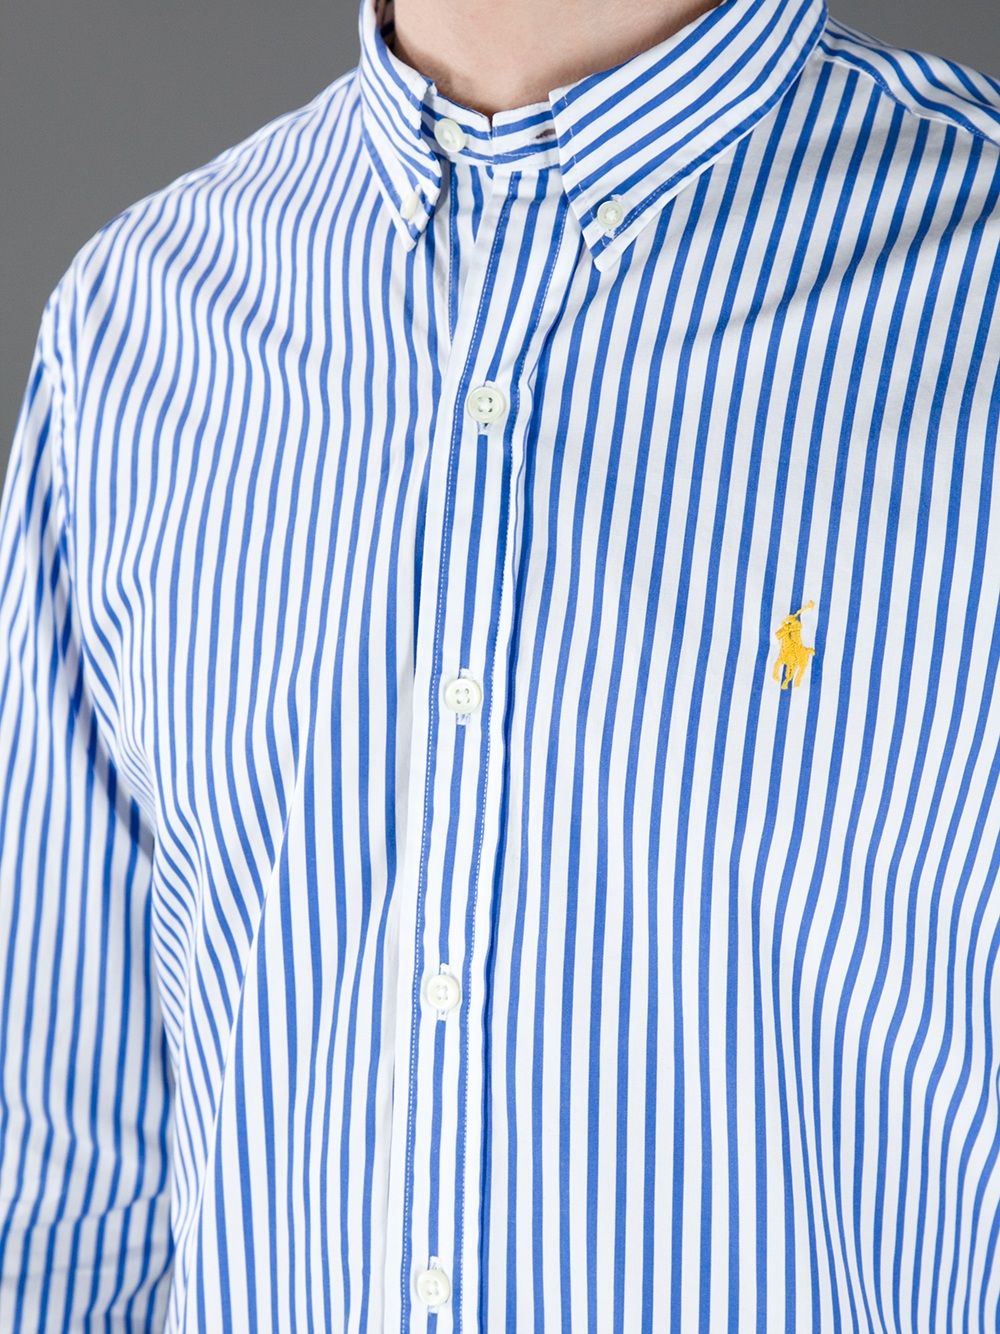 Polo Ralph Lauren Pinstripe Shirt in 